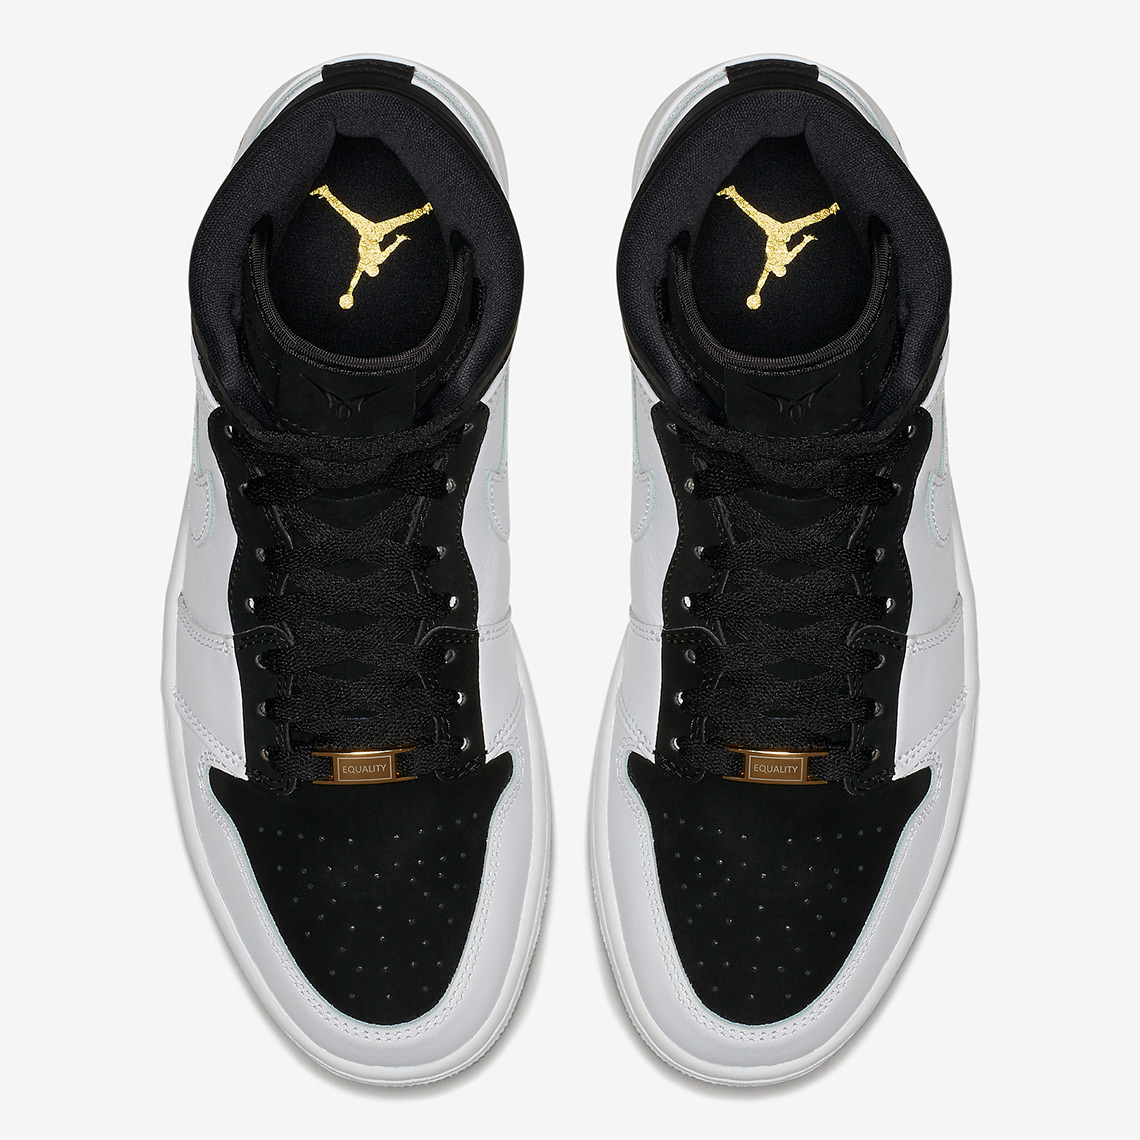 Air Jordan 1 Retro BHM EQUALITY Release Date | SneakerNews.com